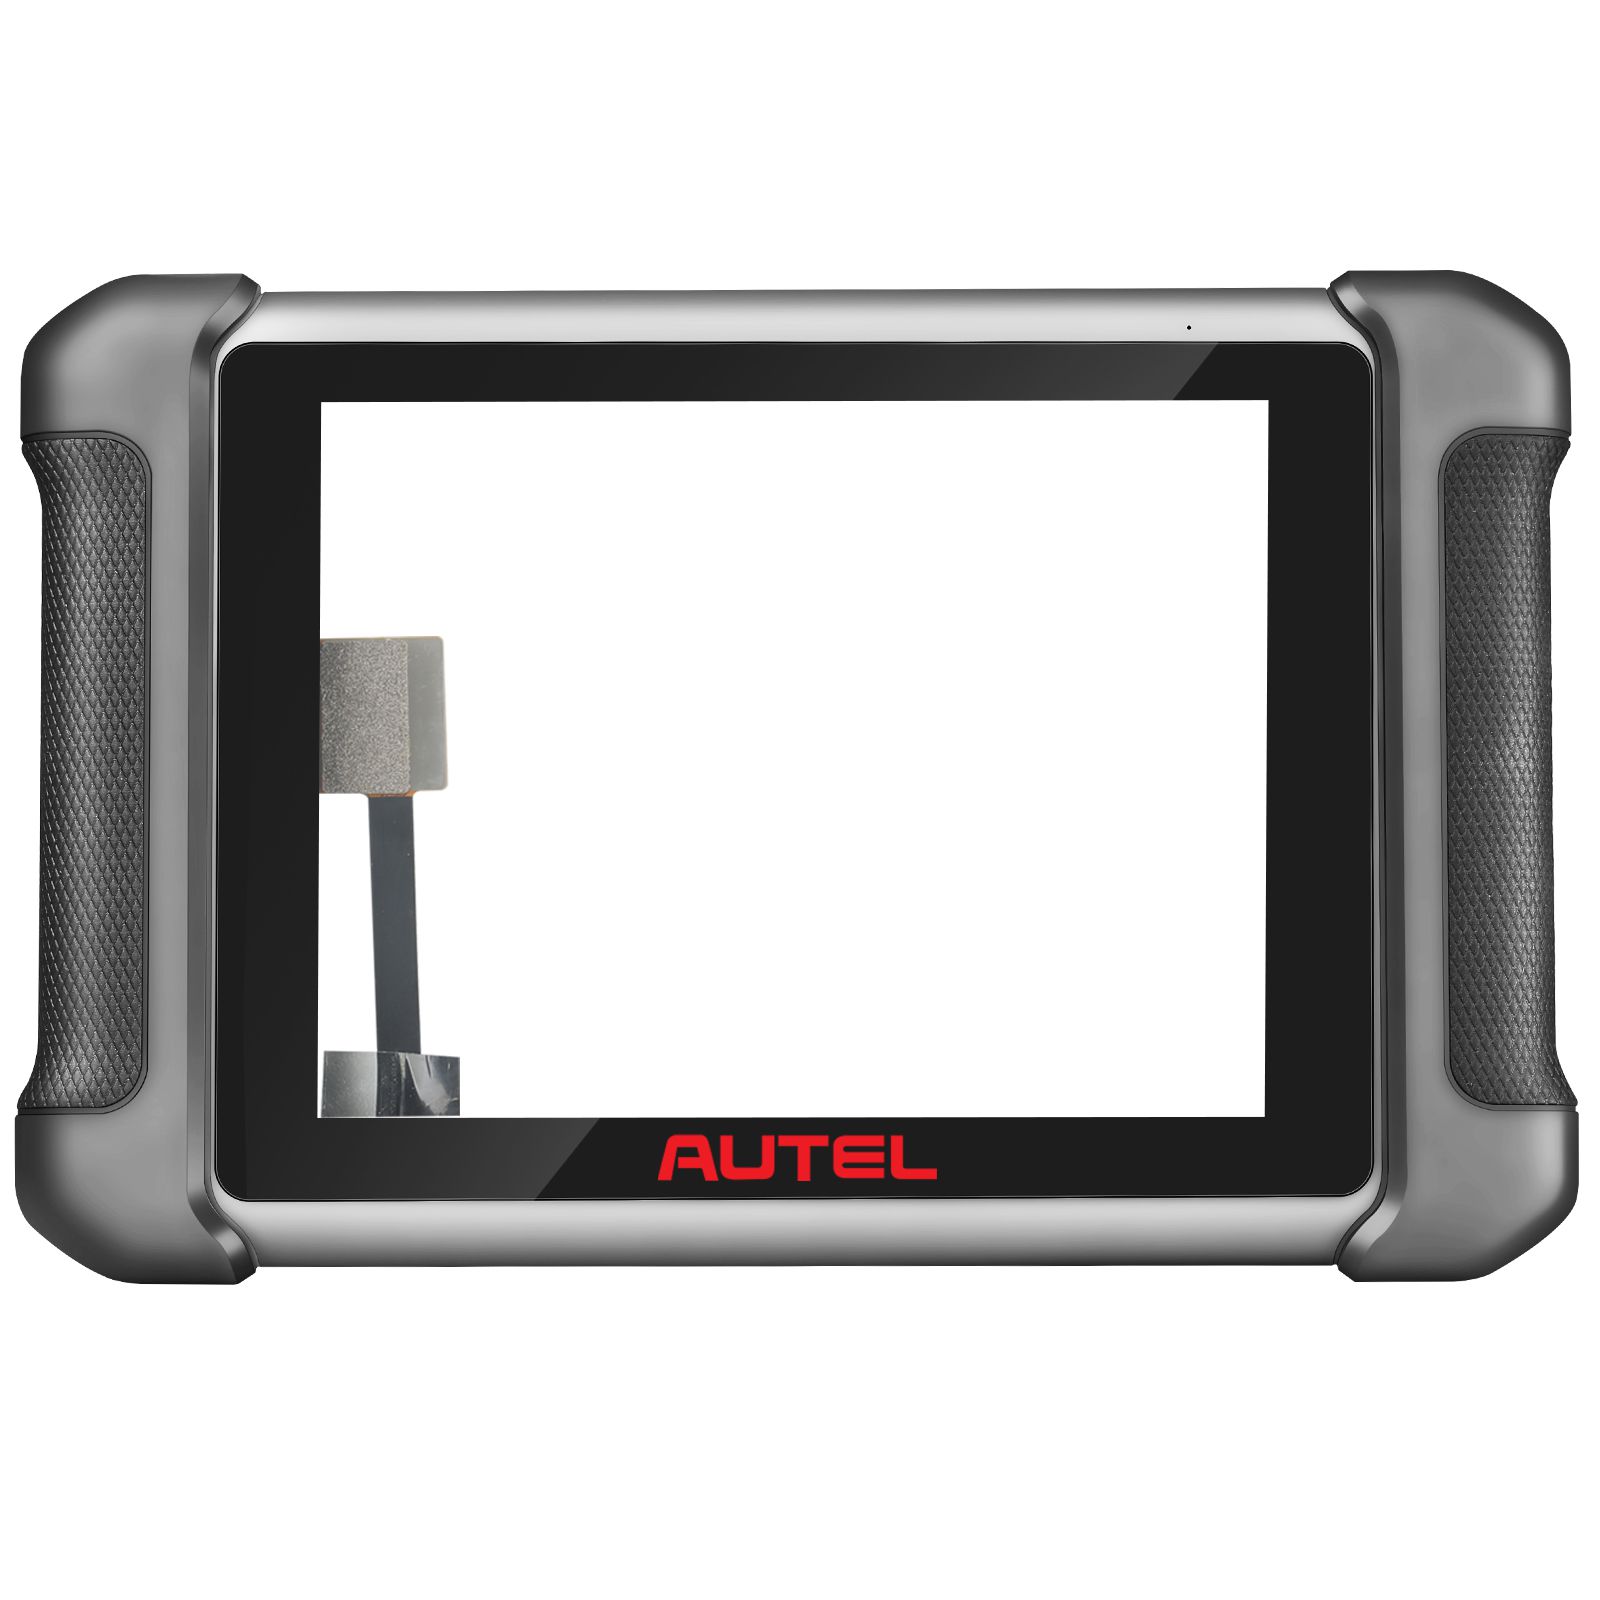 AUTEL MaxiSYS MS906 자동 진단 스캐너의 기본 TP 터치스크린